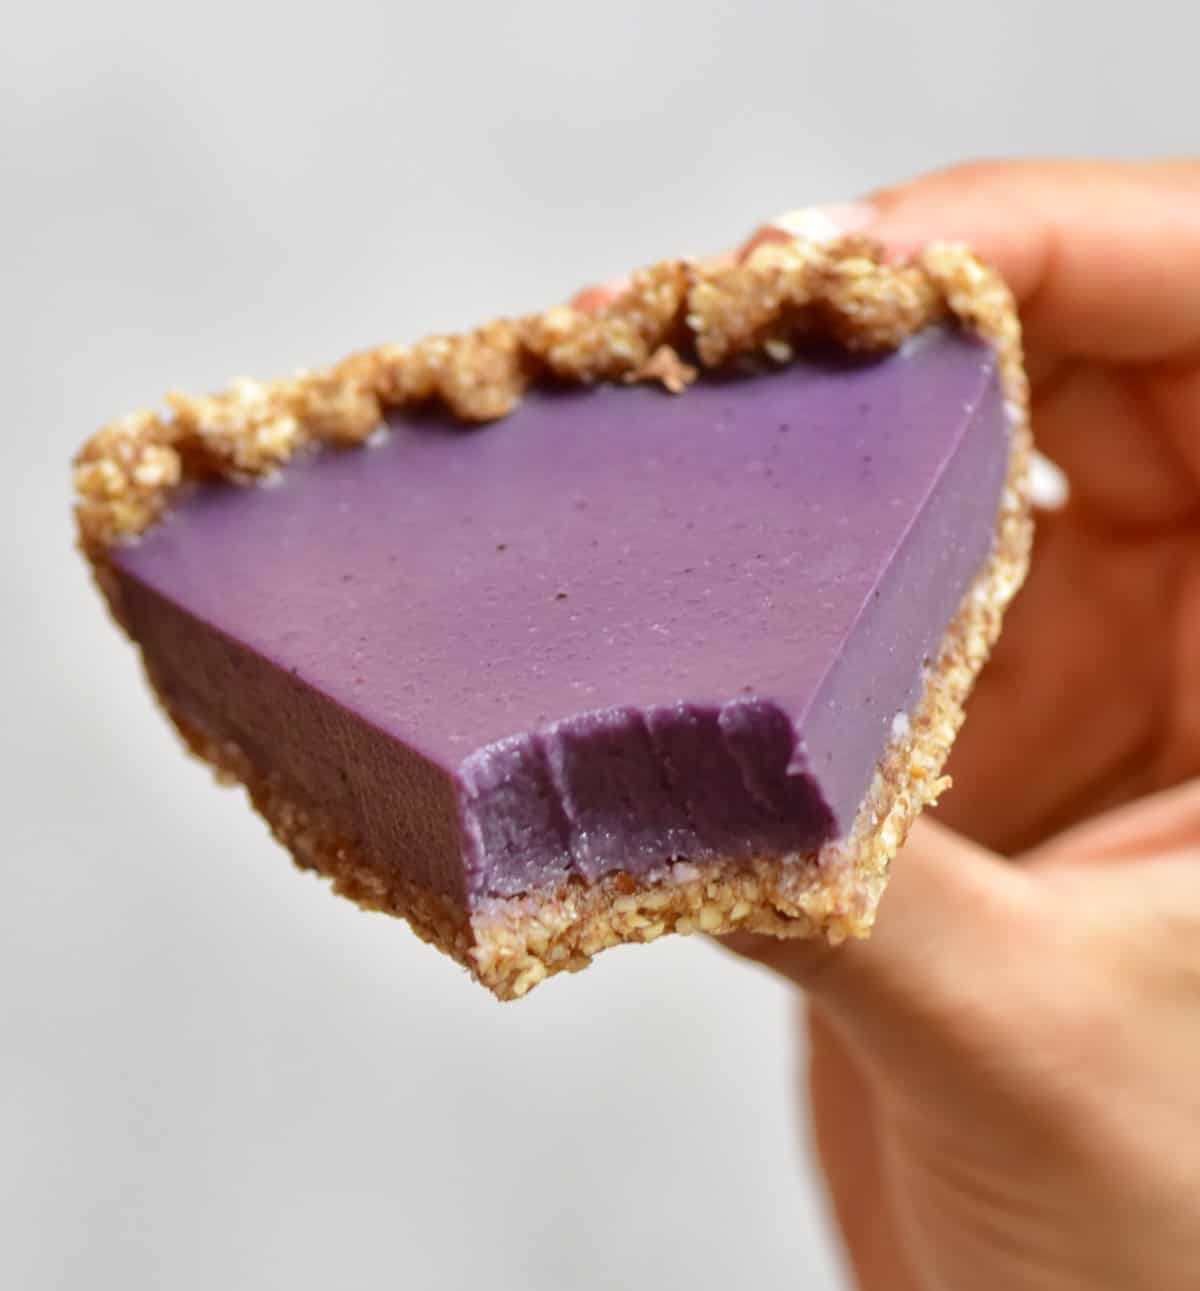 A part-eaten slice of blueberry tart